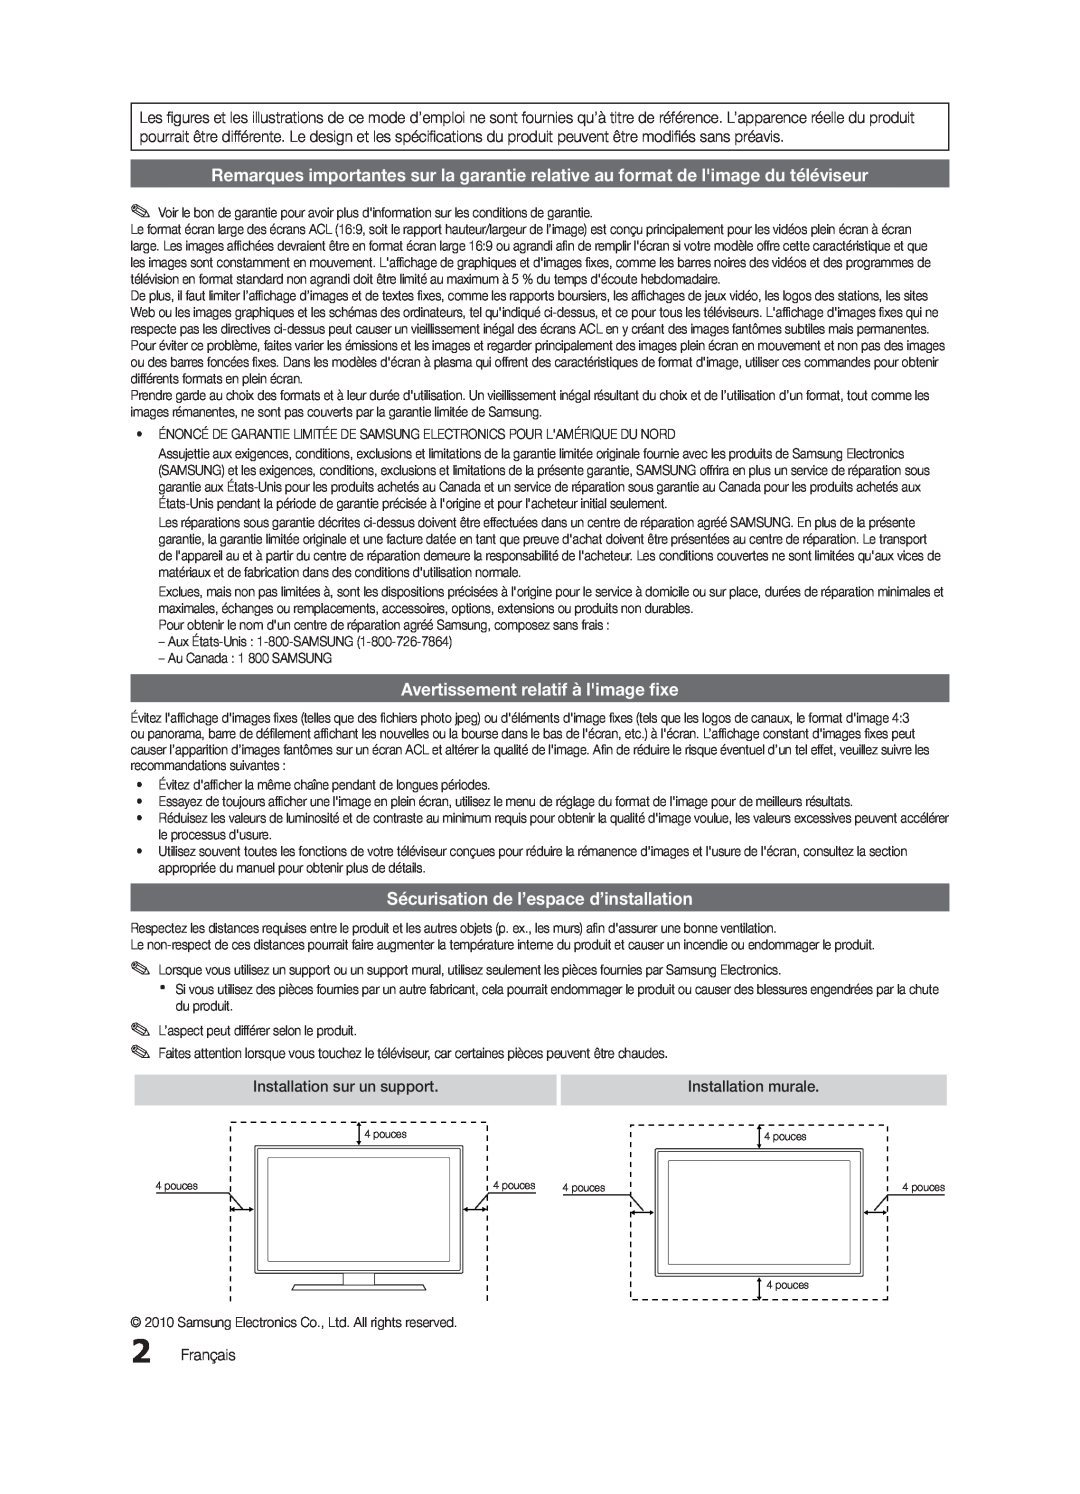 Samsung BN68-02620B-06 Avertissement relatif à limage fixe, Sécurisation de l’espace d’installation, Installation murale 